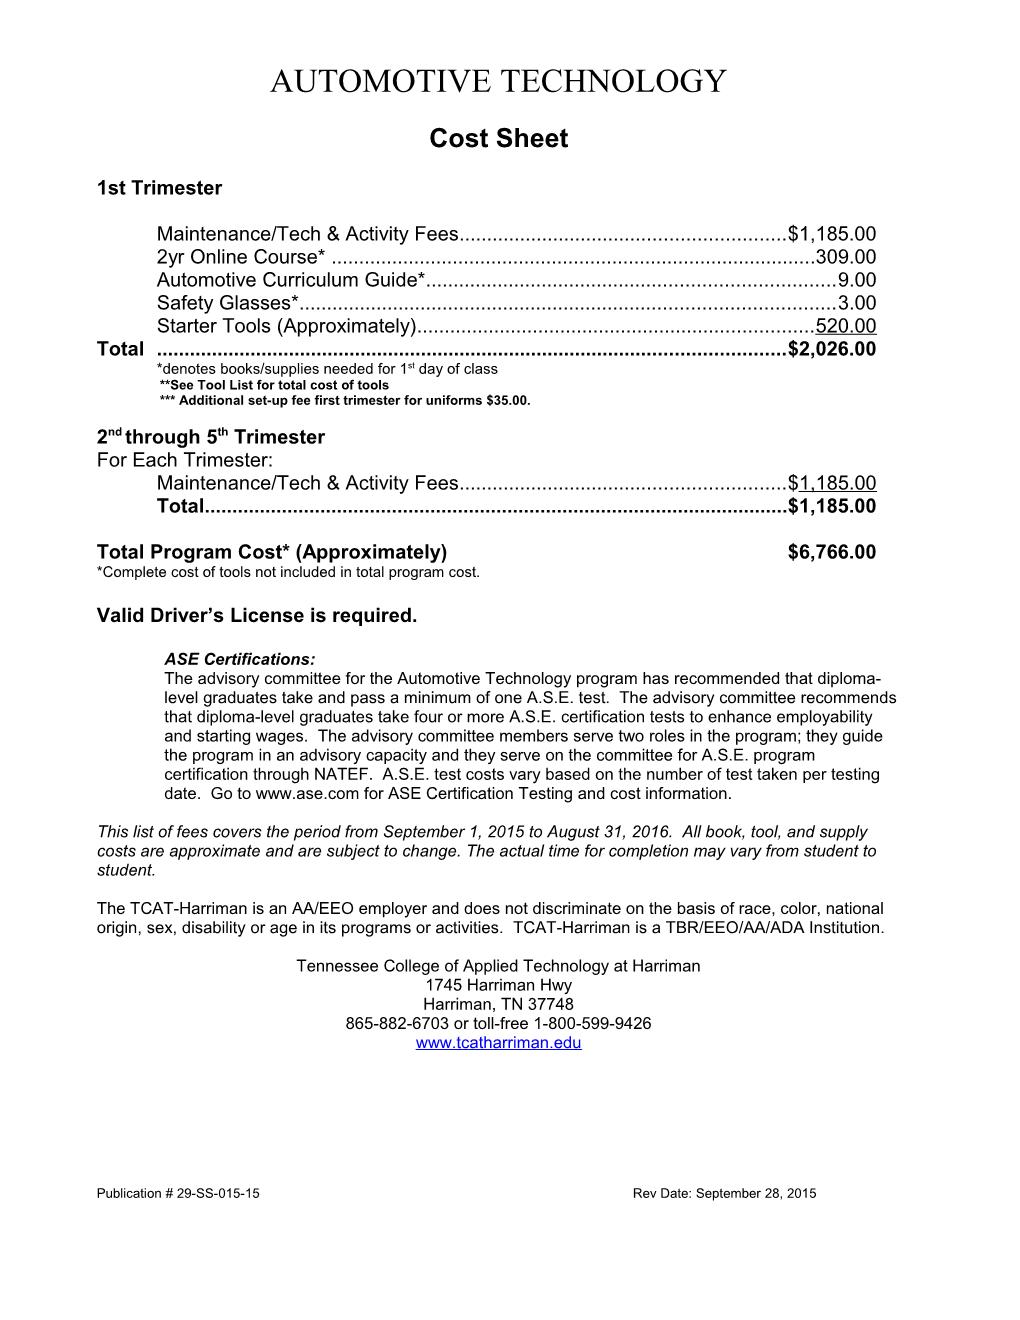 Maintenance/Tech & Activity Fees $1,185.00